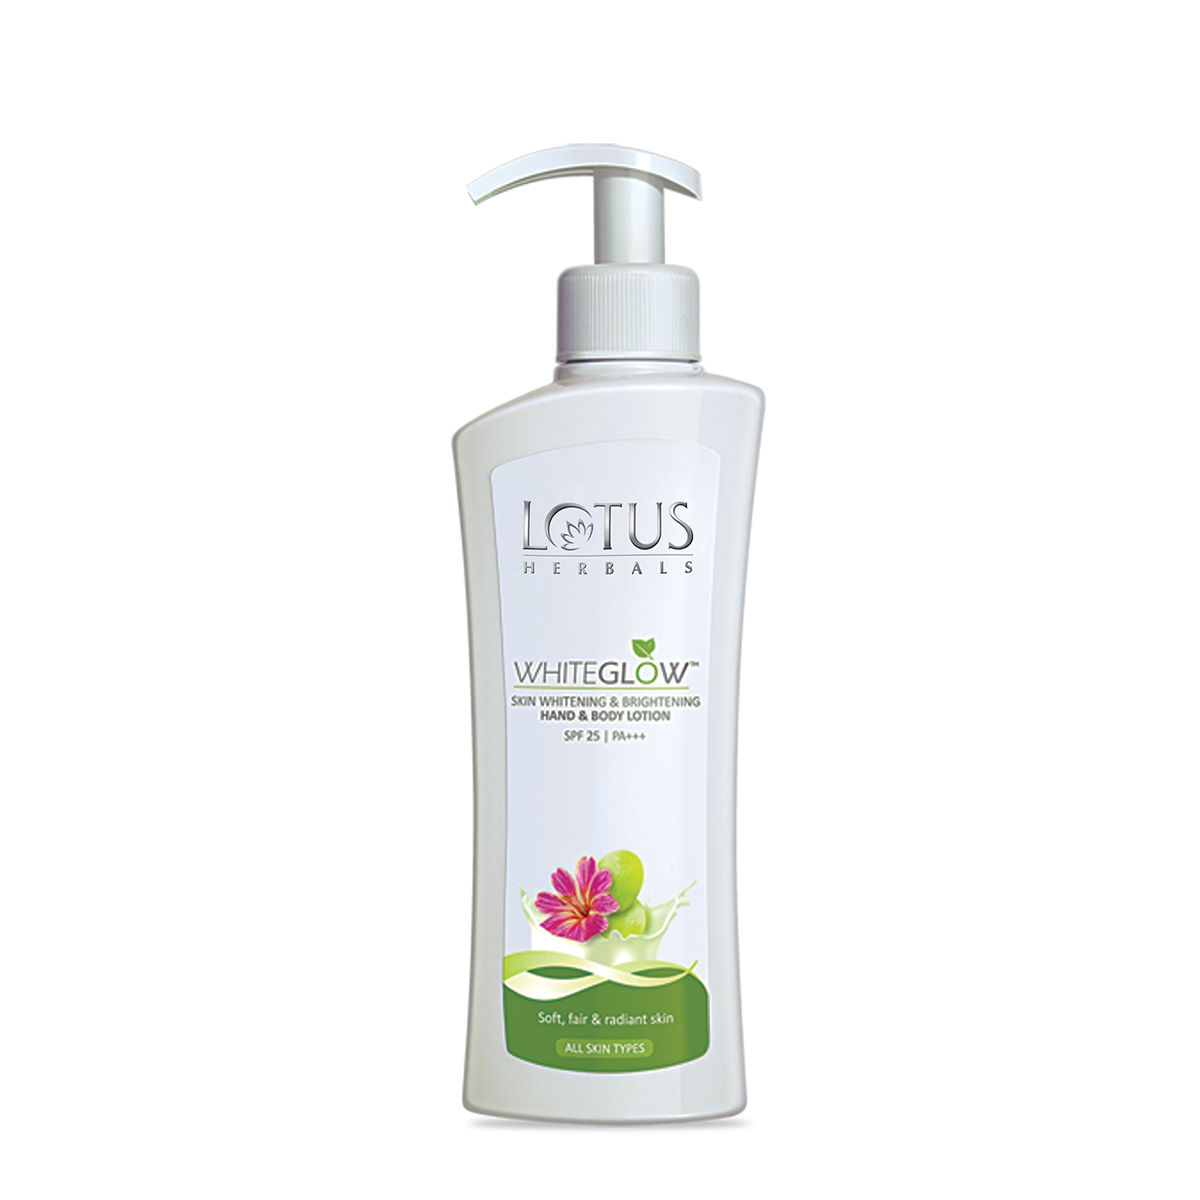 Lotus Herbals Whiteglow Skin Whitening & Brightening Hand & Body Lotion Spf 25 Pa+++